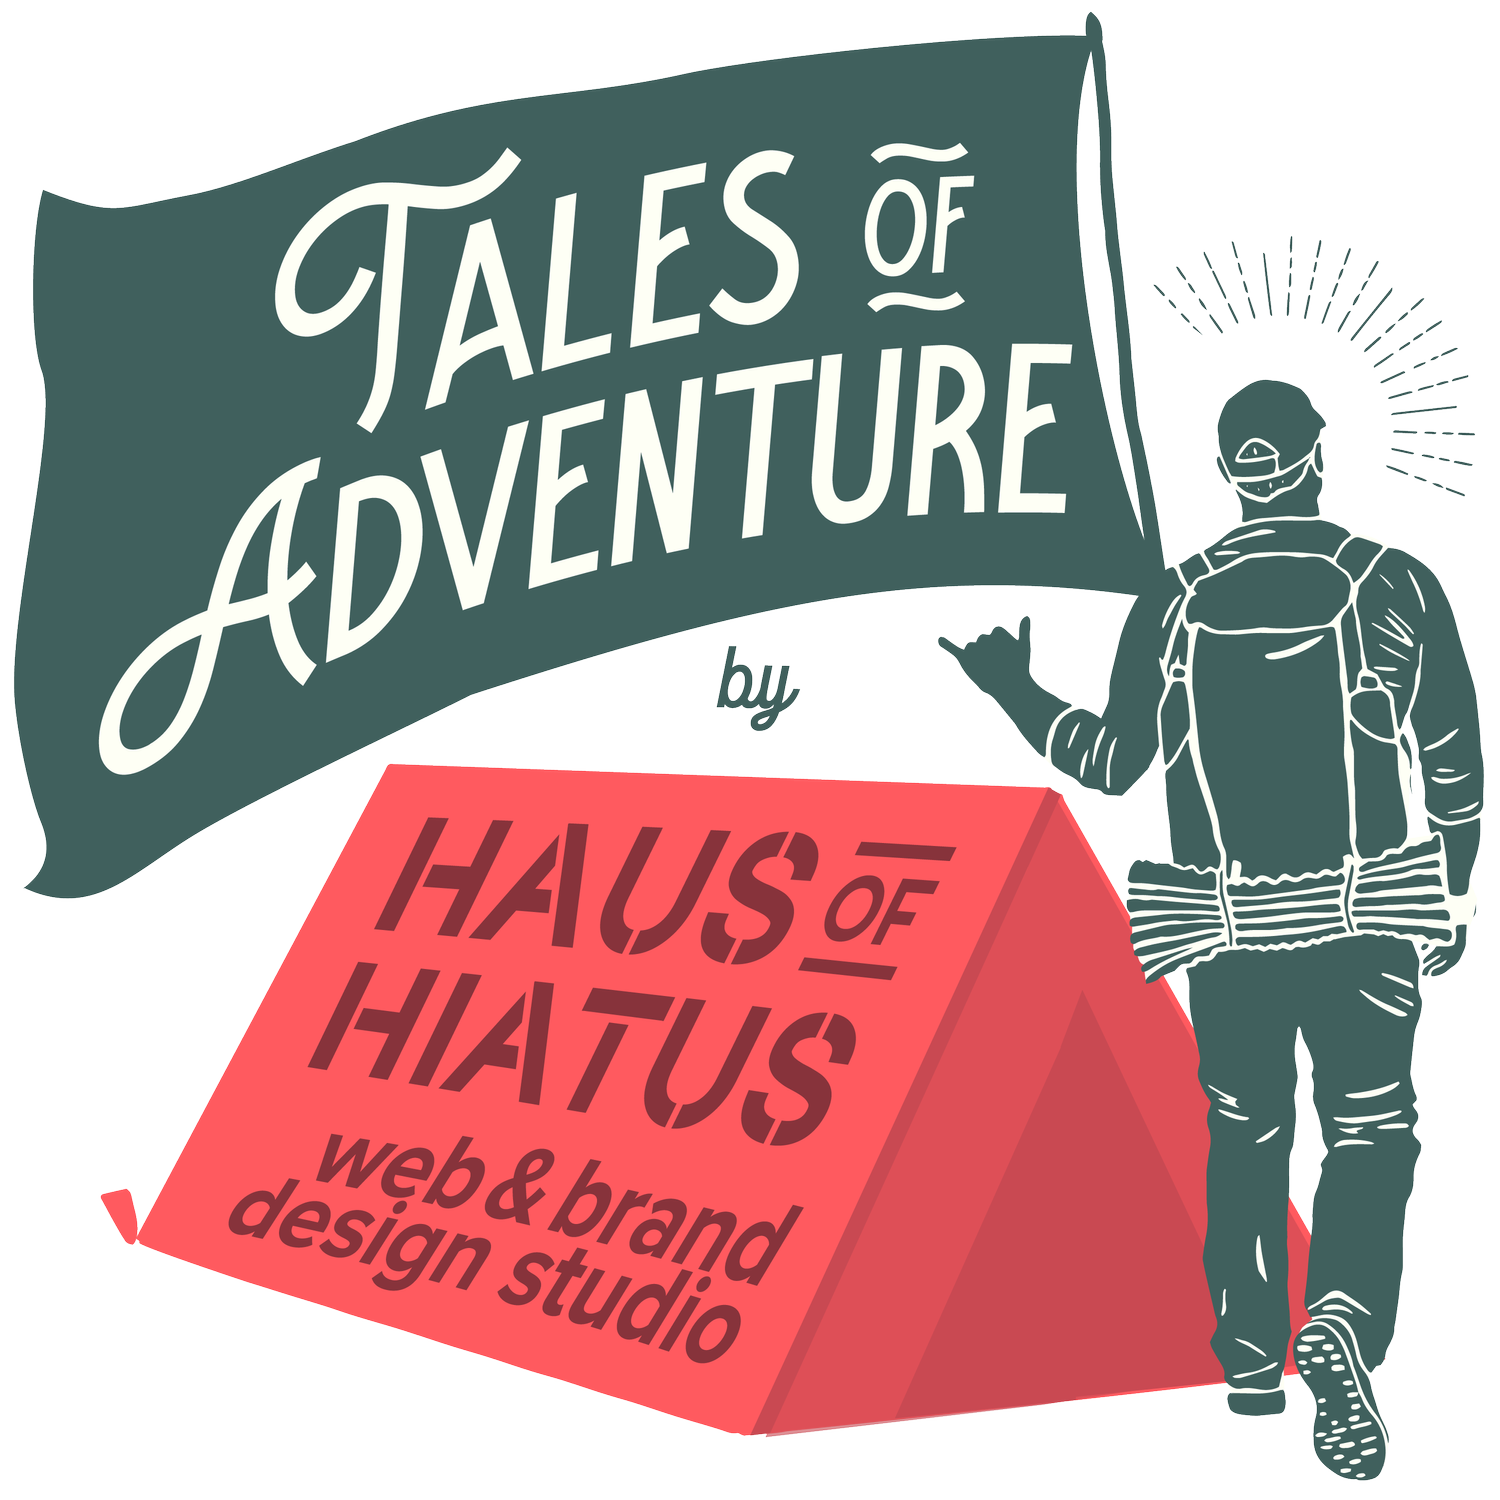 Tales of Adventure by Haus of Hiatus, web &amp; brand design studio